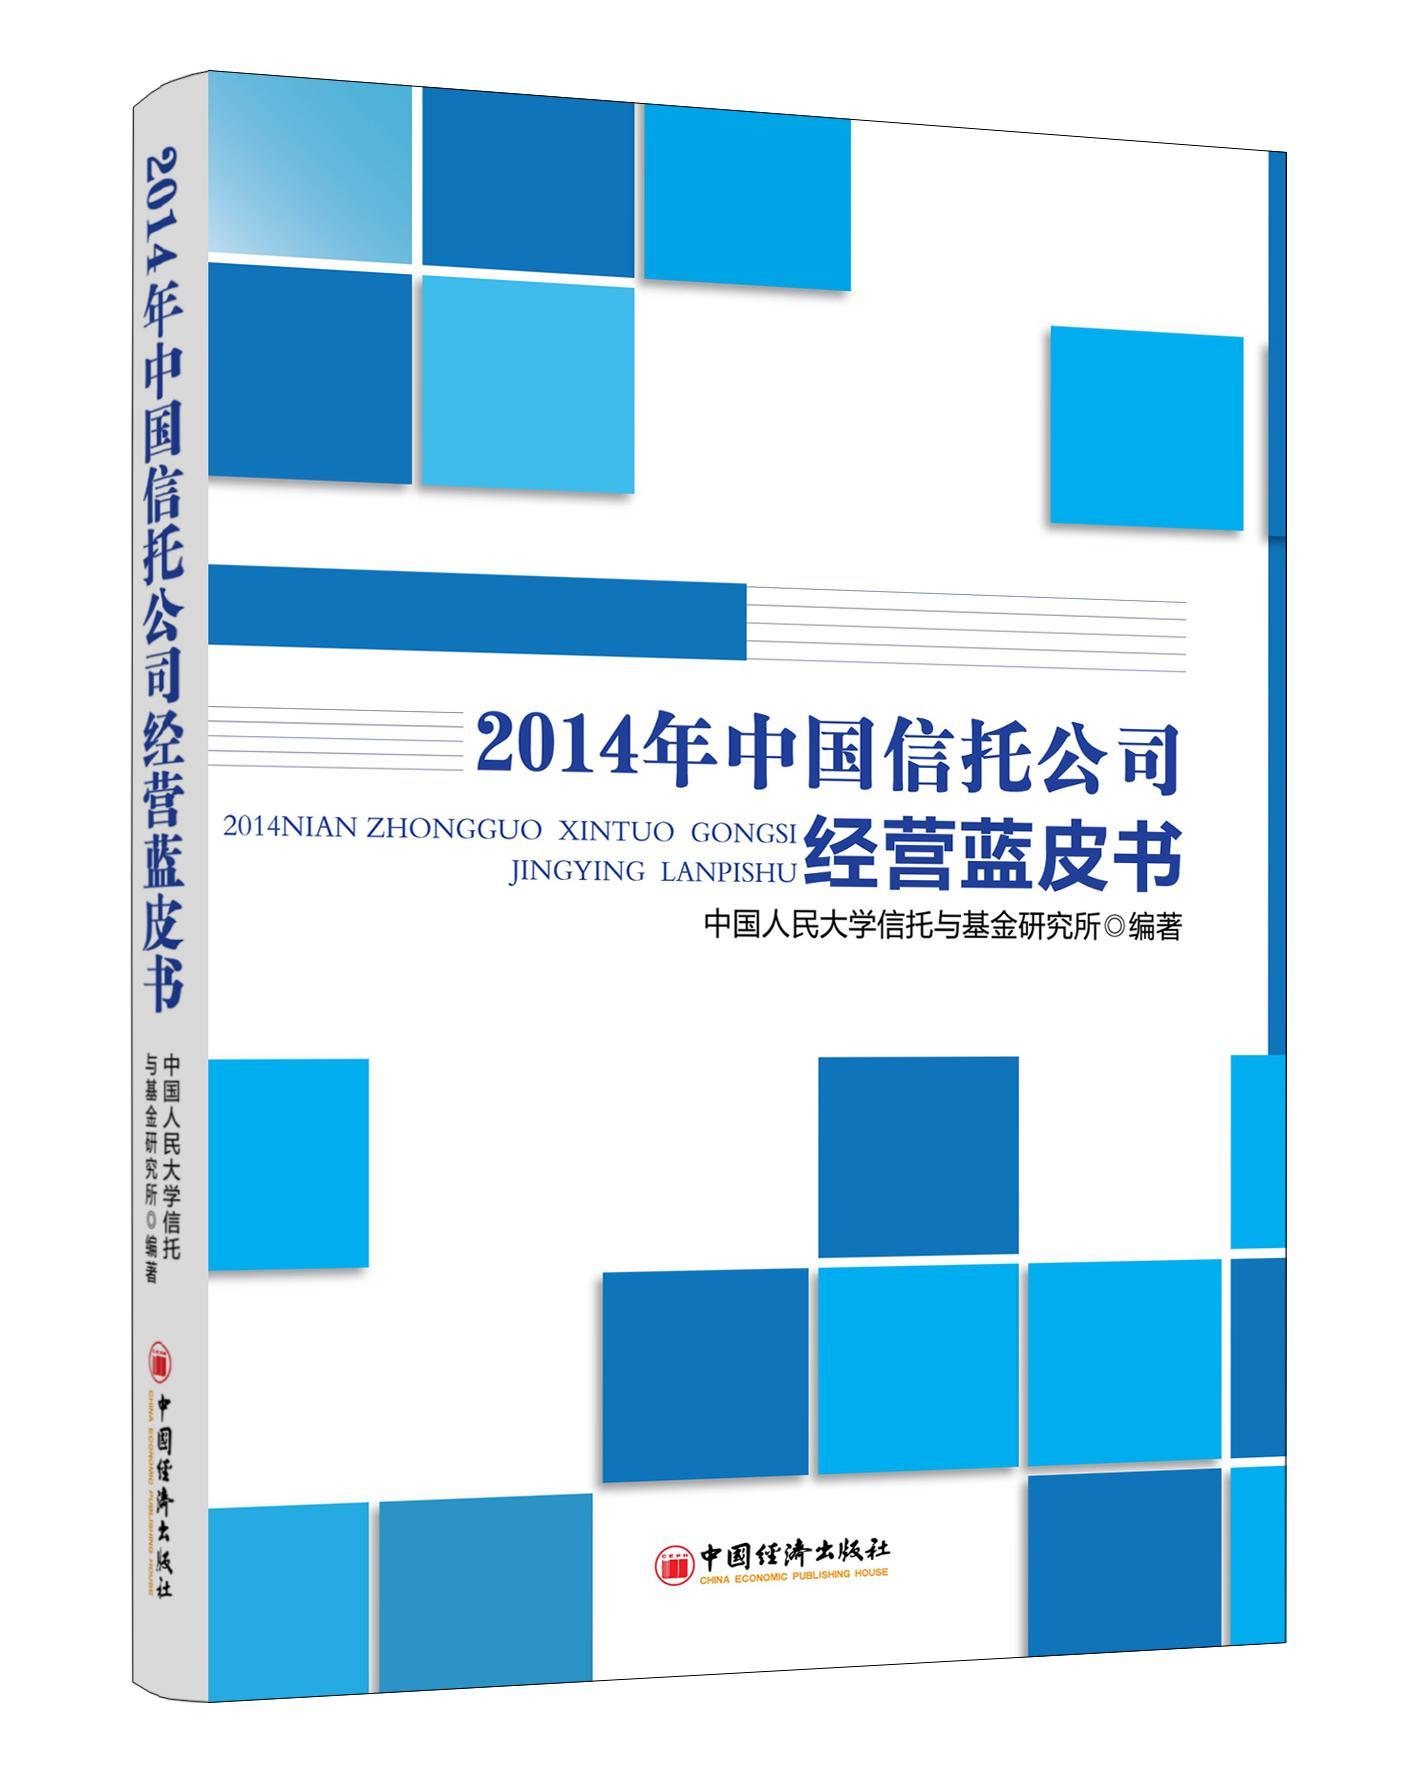 [rt] 2014年中国信托公司经营蓝皮书  中国人民大学信托与基金研究所  中国经济出版社  管理